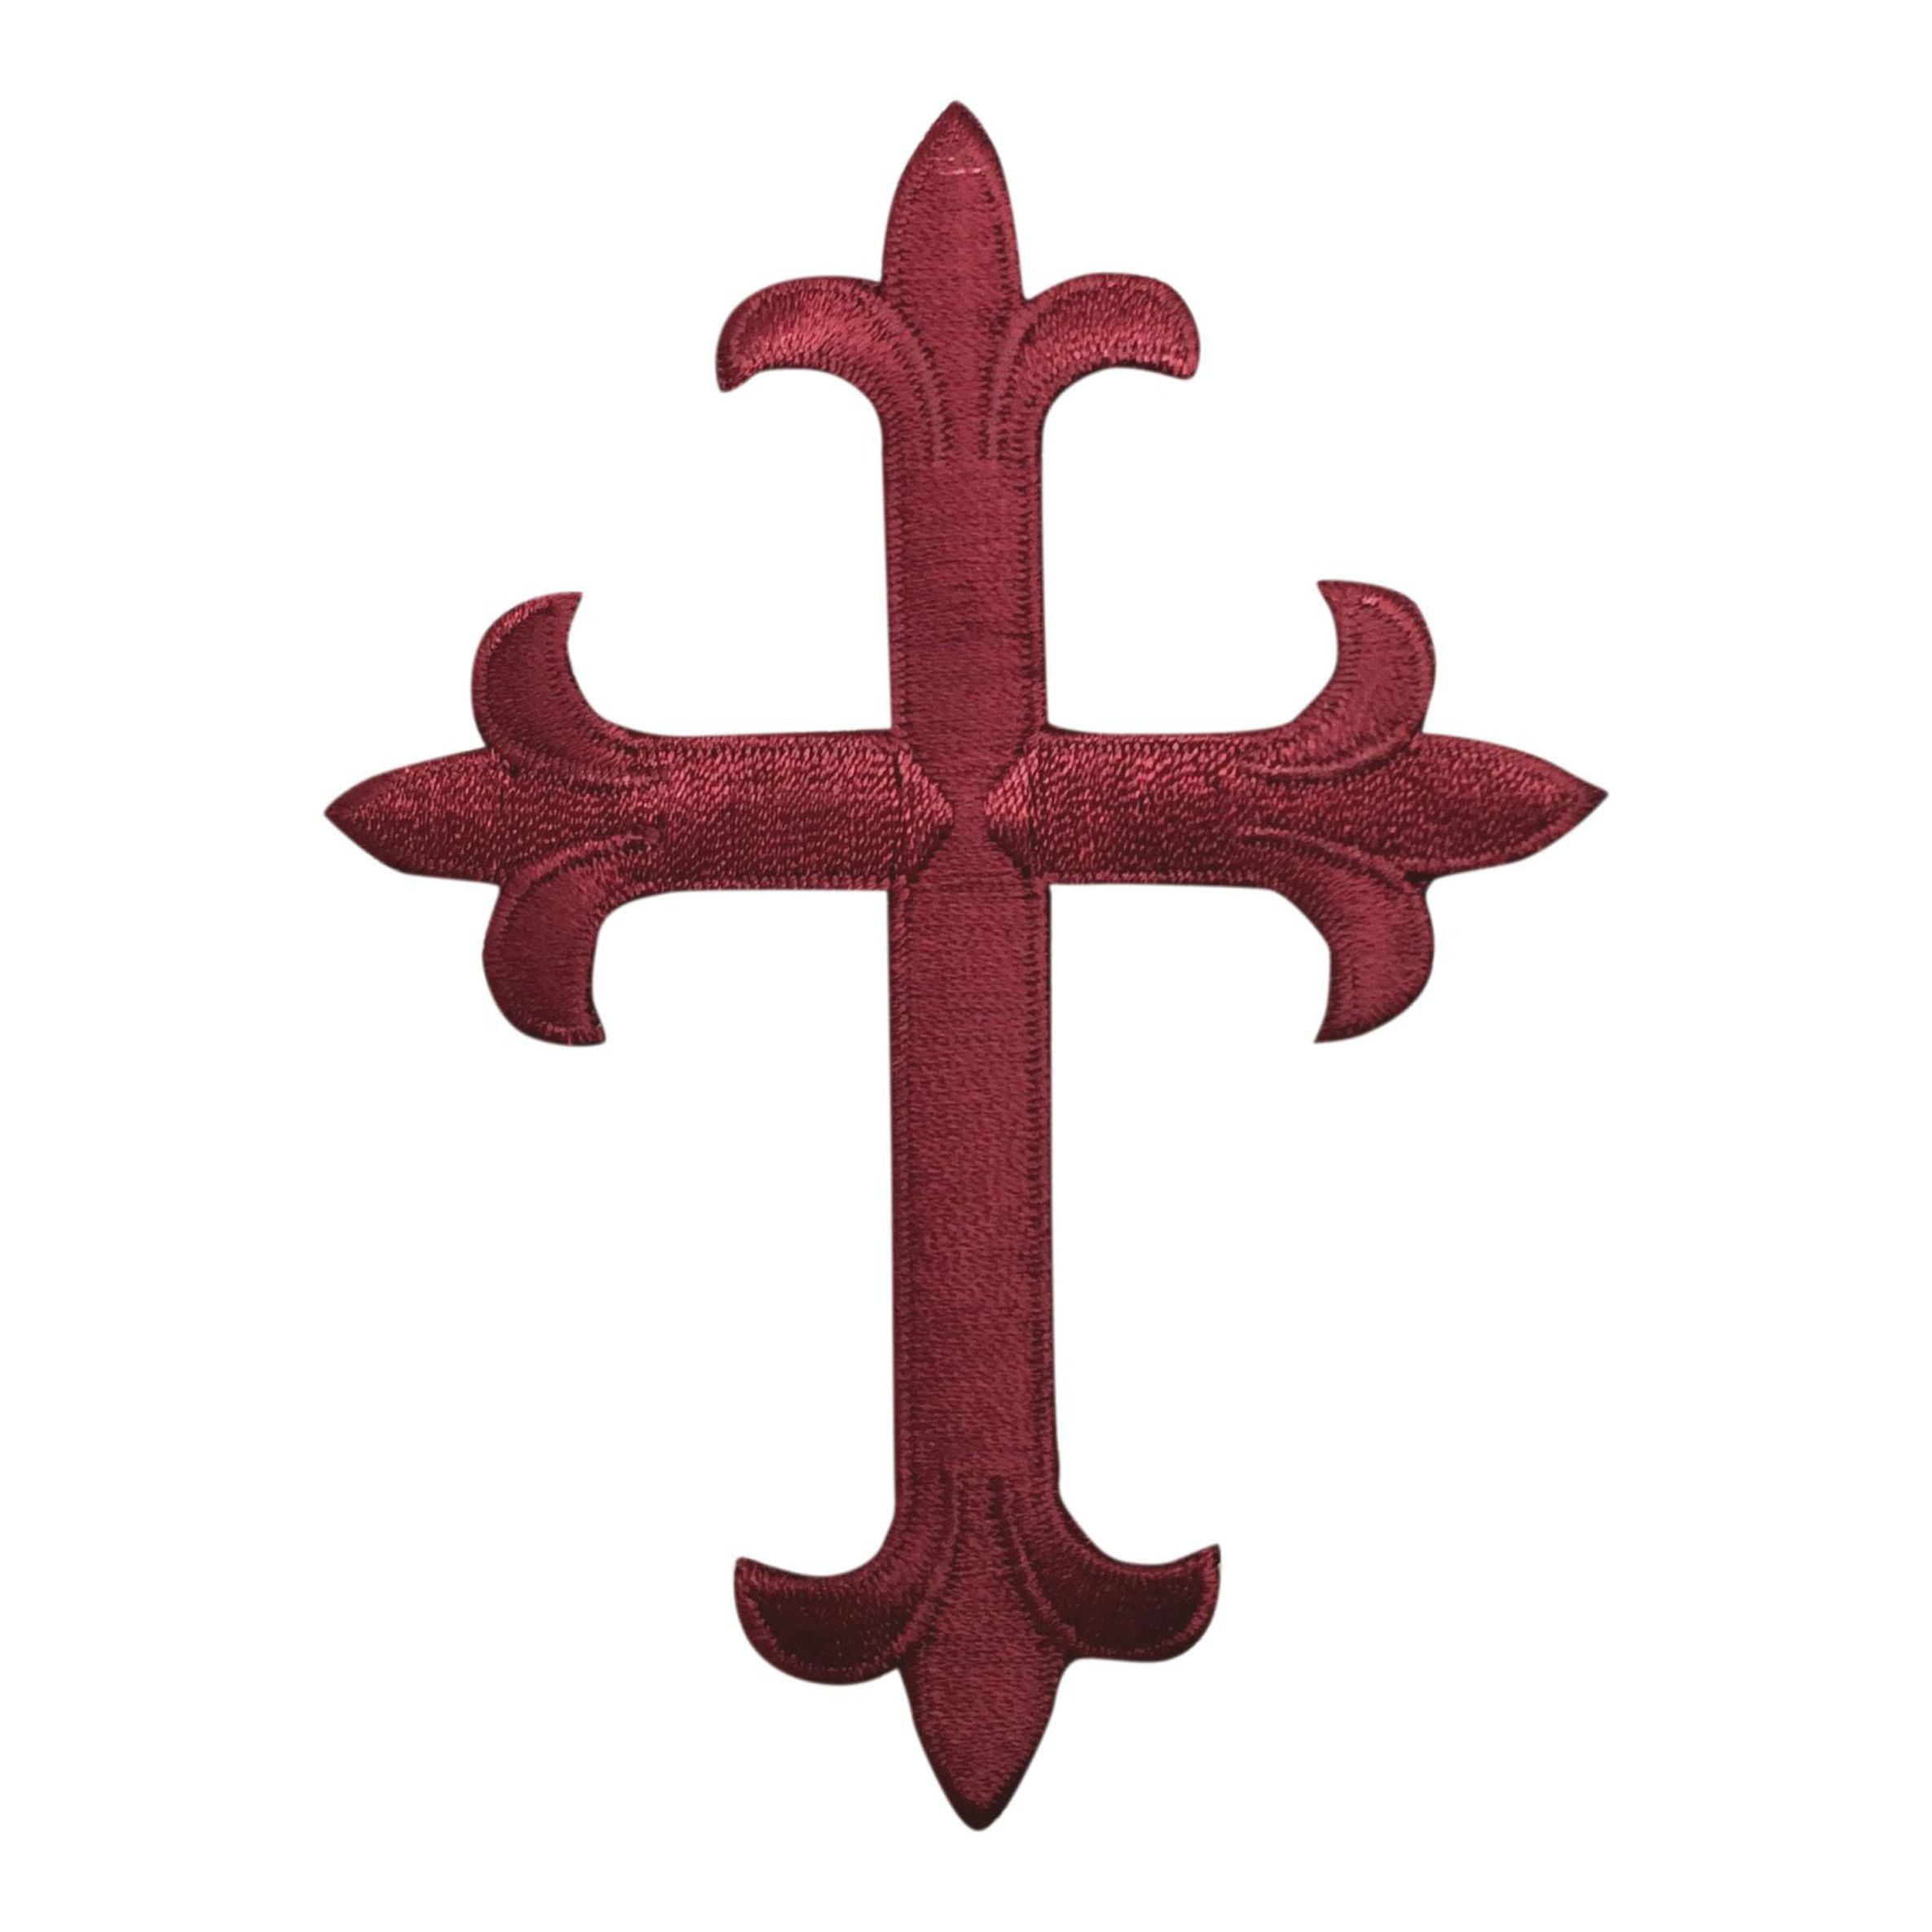 Mini Cross Applique Patch Black Religious Jesus Badge 1 3-pack, Iron On -   Denmark